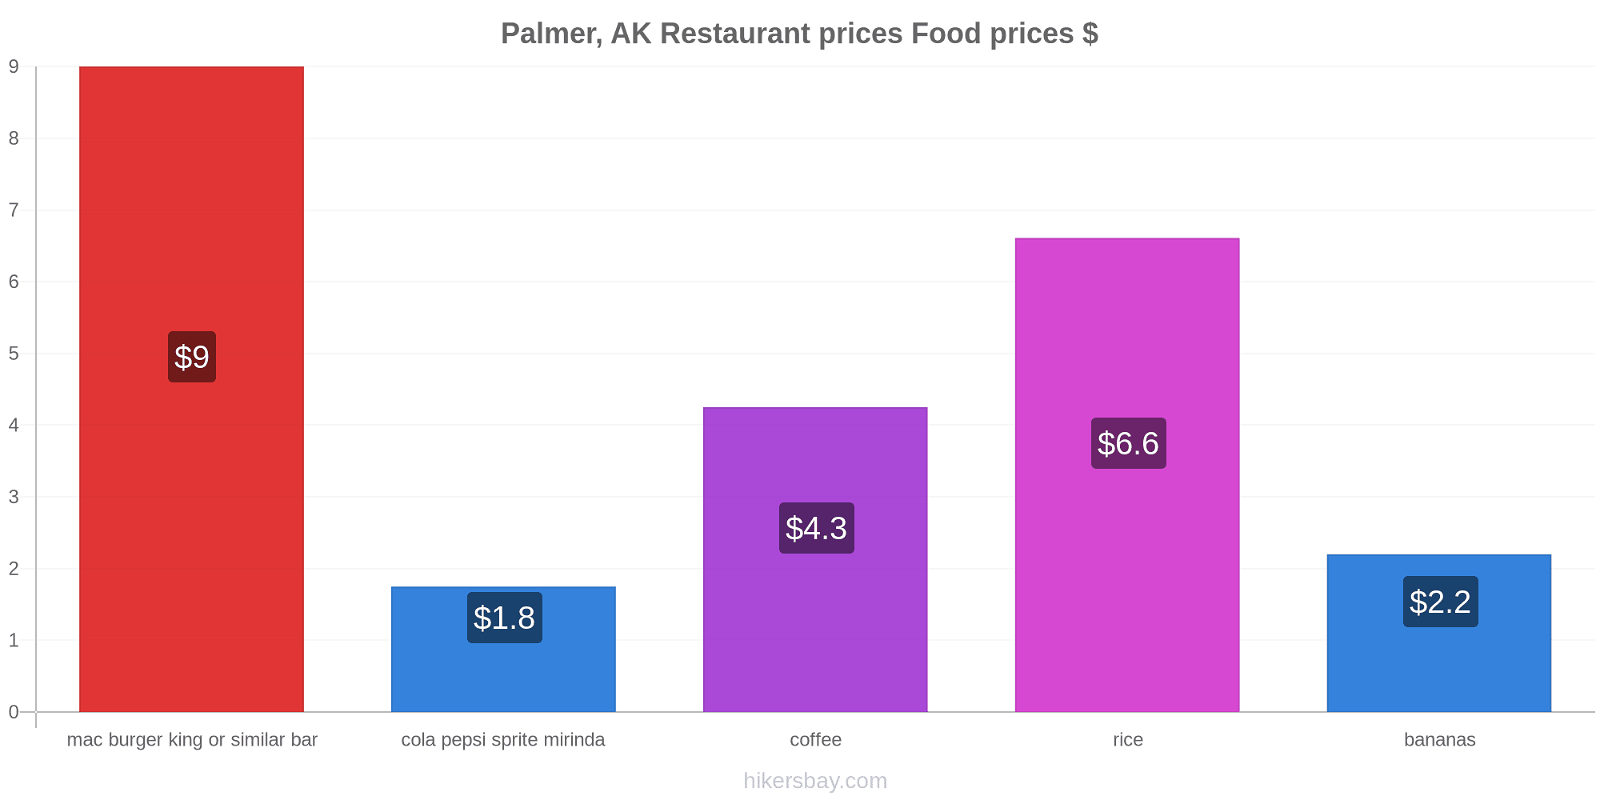 Palmer, AK price changes hikersbay.com